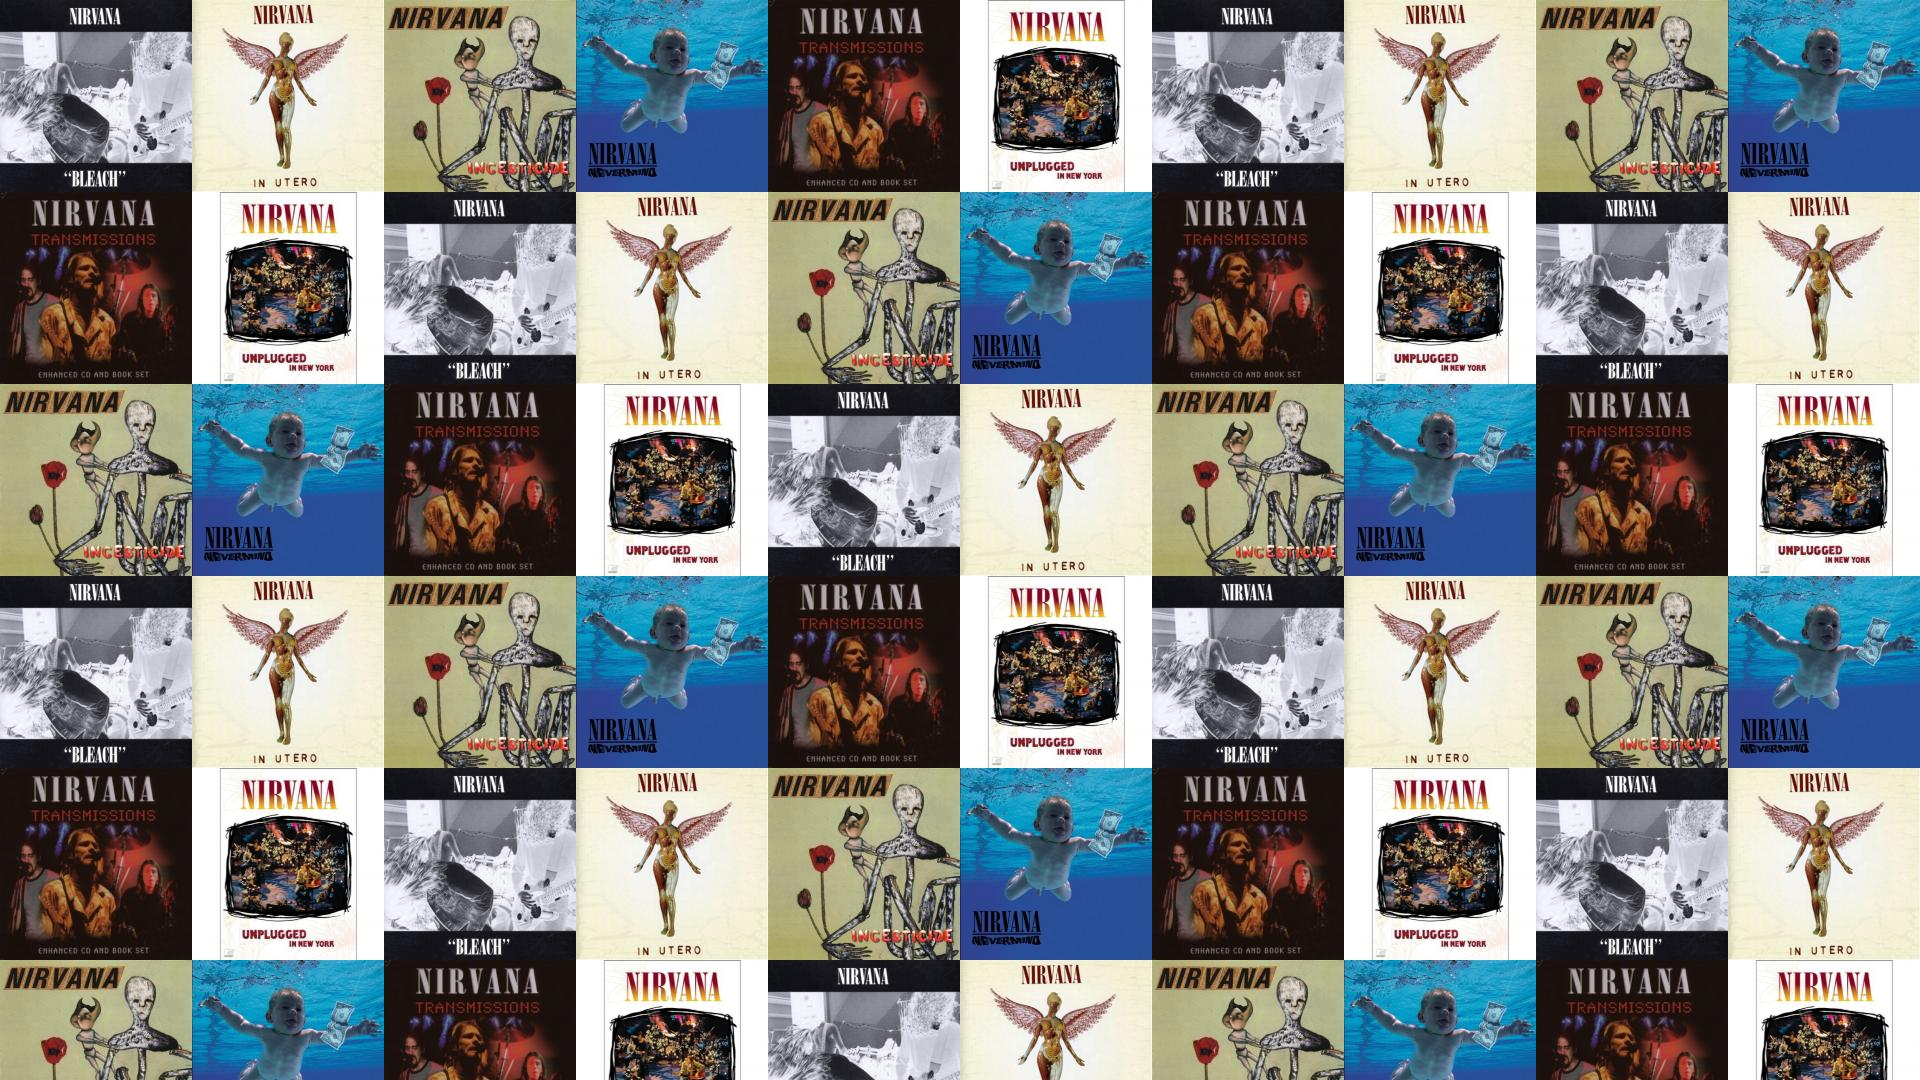 Nirvana Bleach In Utero Incesticide Nevermind Transmissions Unplugged Wallpaper « Tiled Desktop Wallpaper